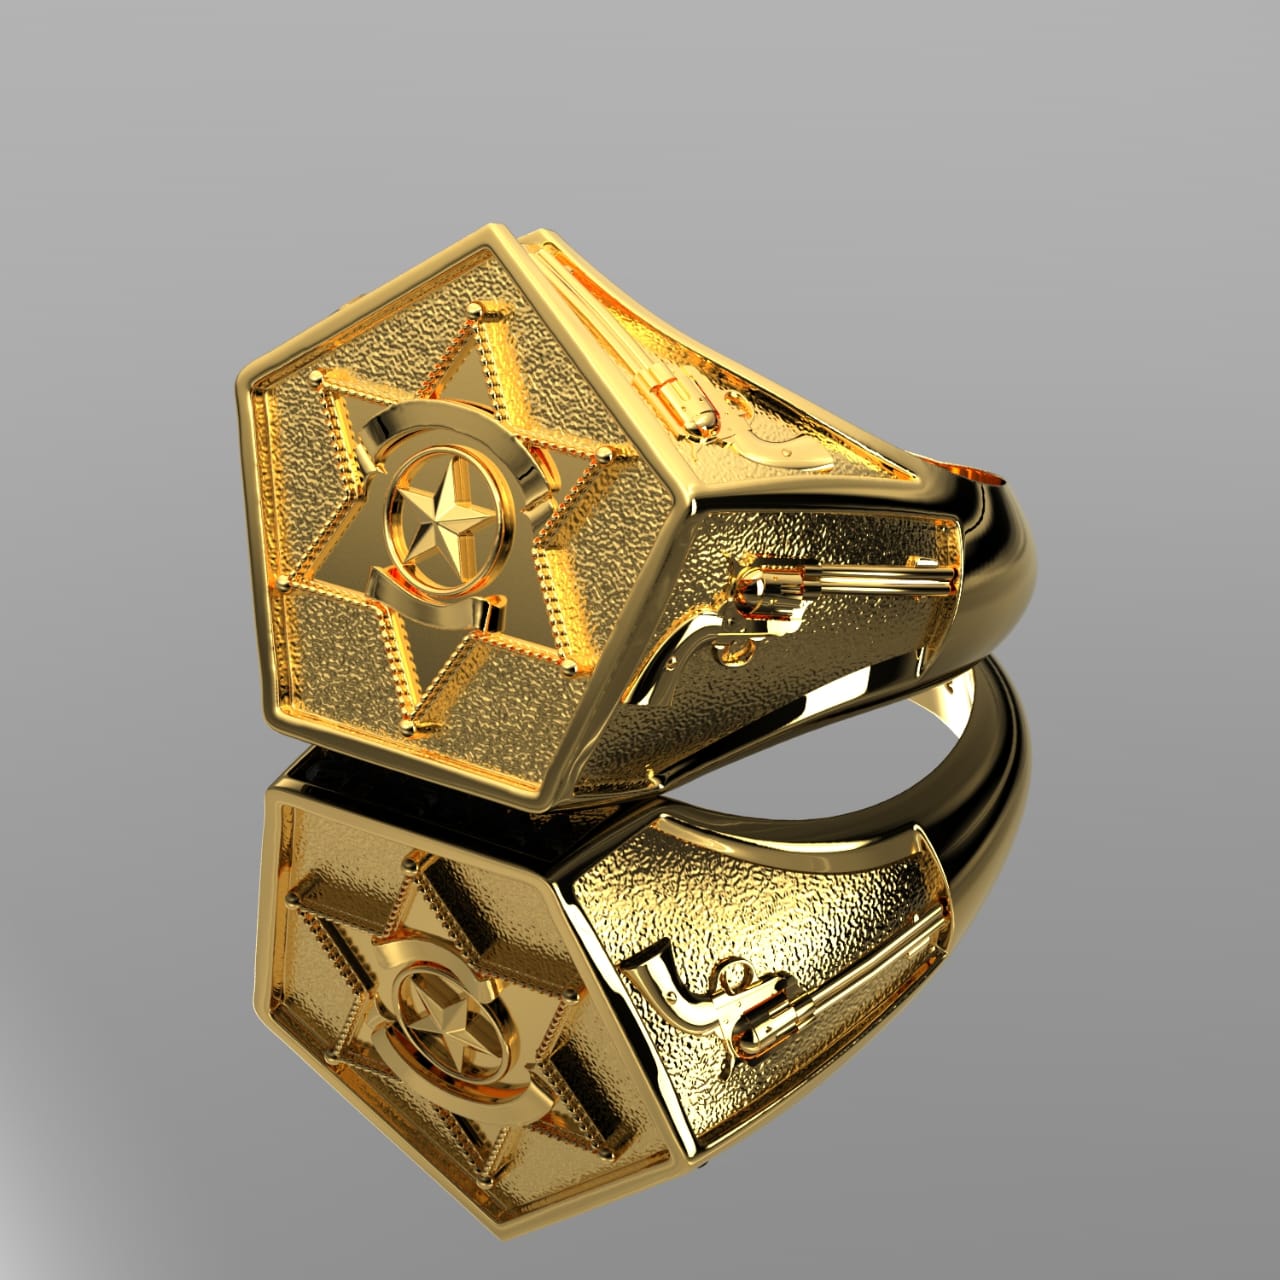 Engraved Hexagon Gold Men's Wedding Ring | Berlinger Jewelry